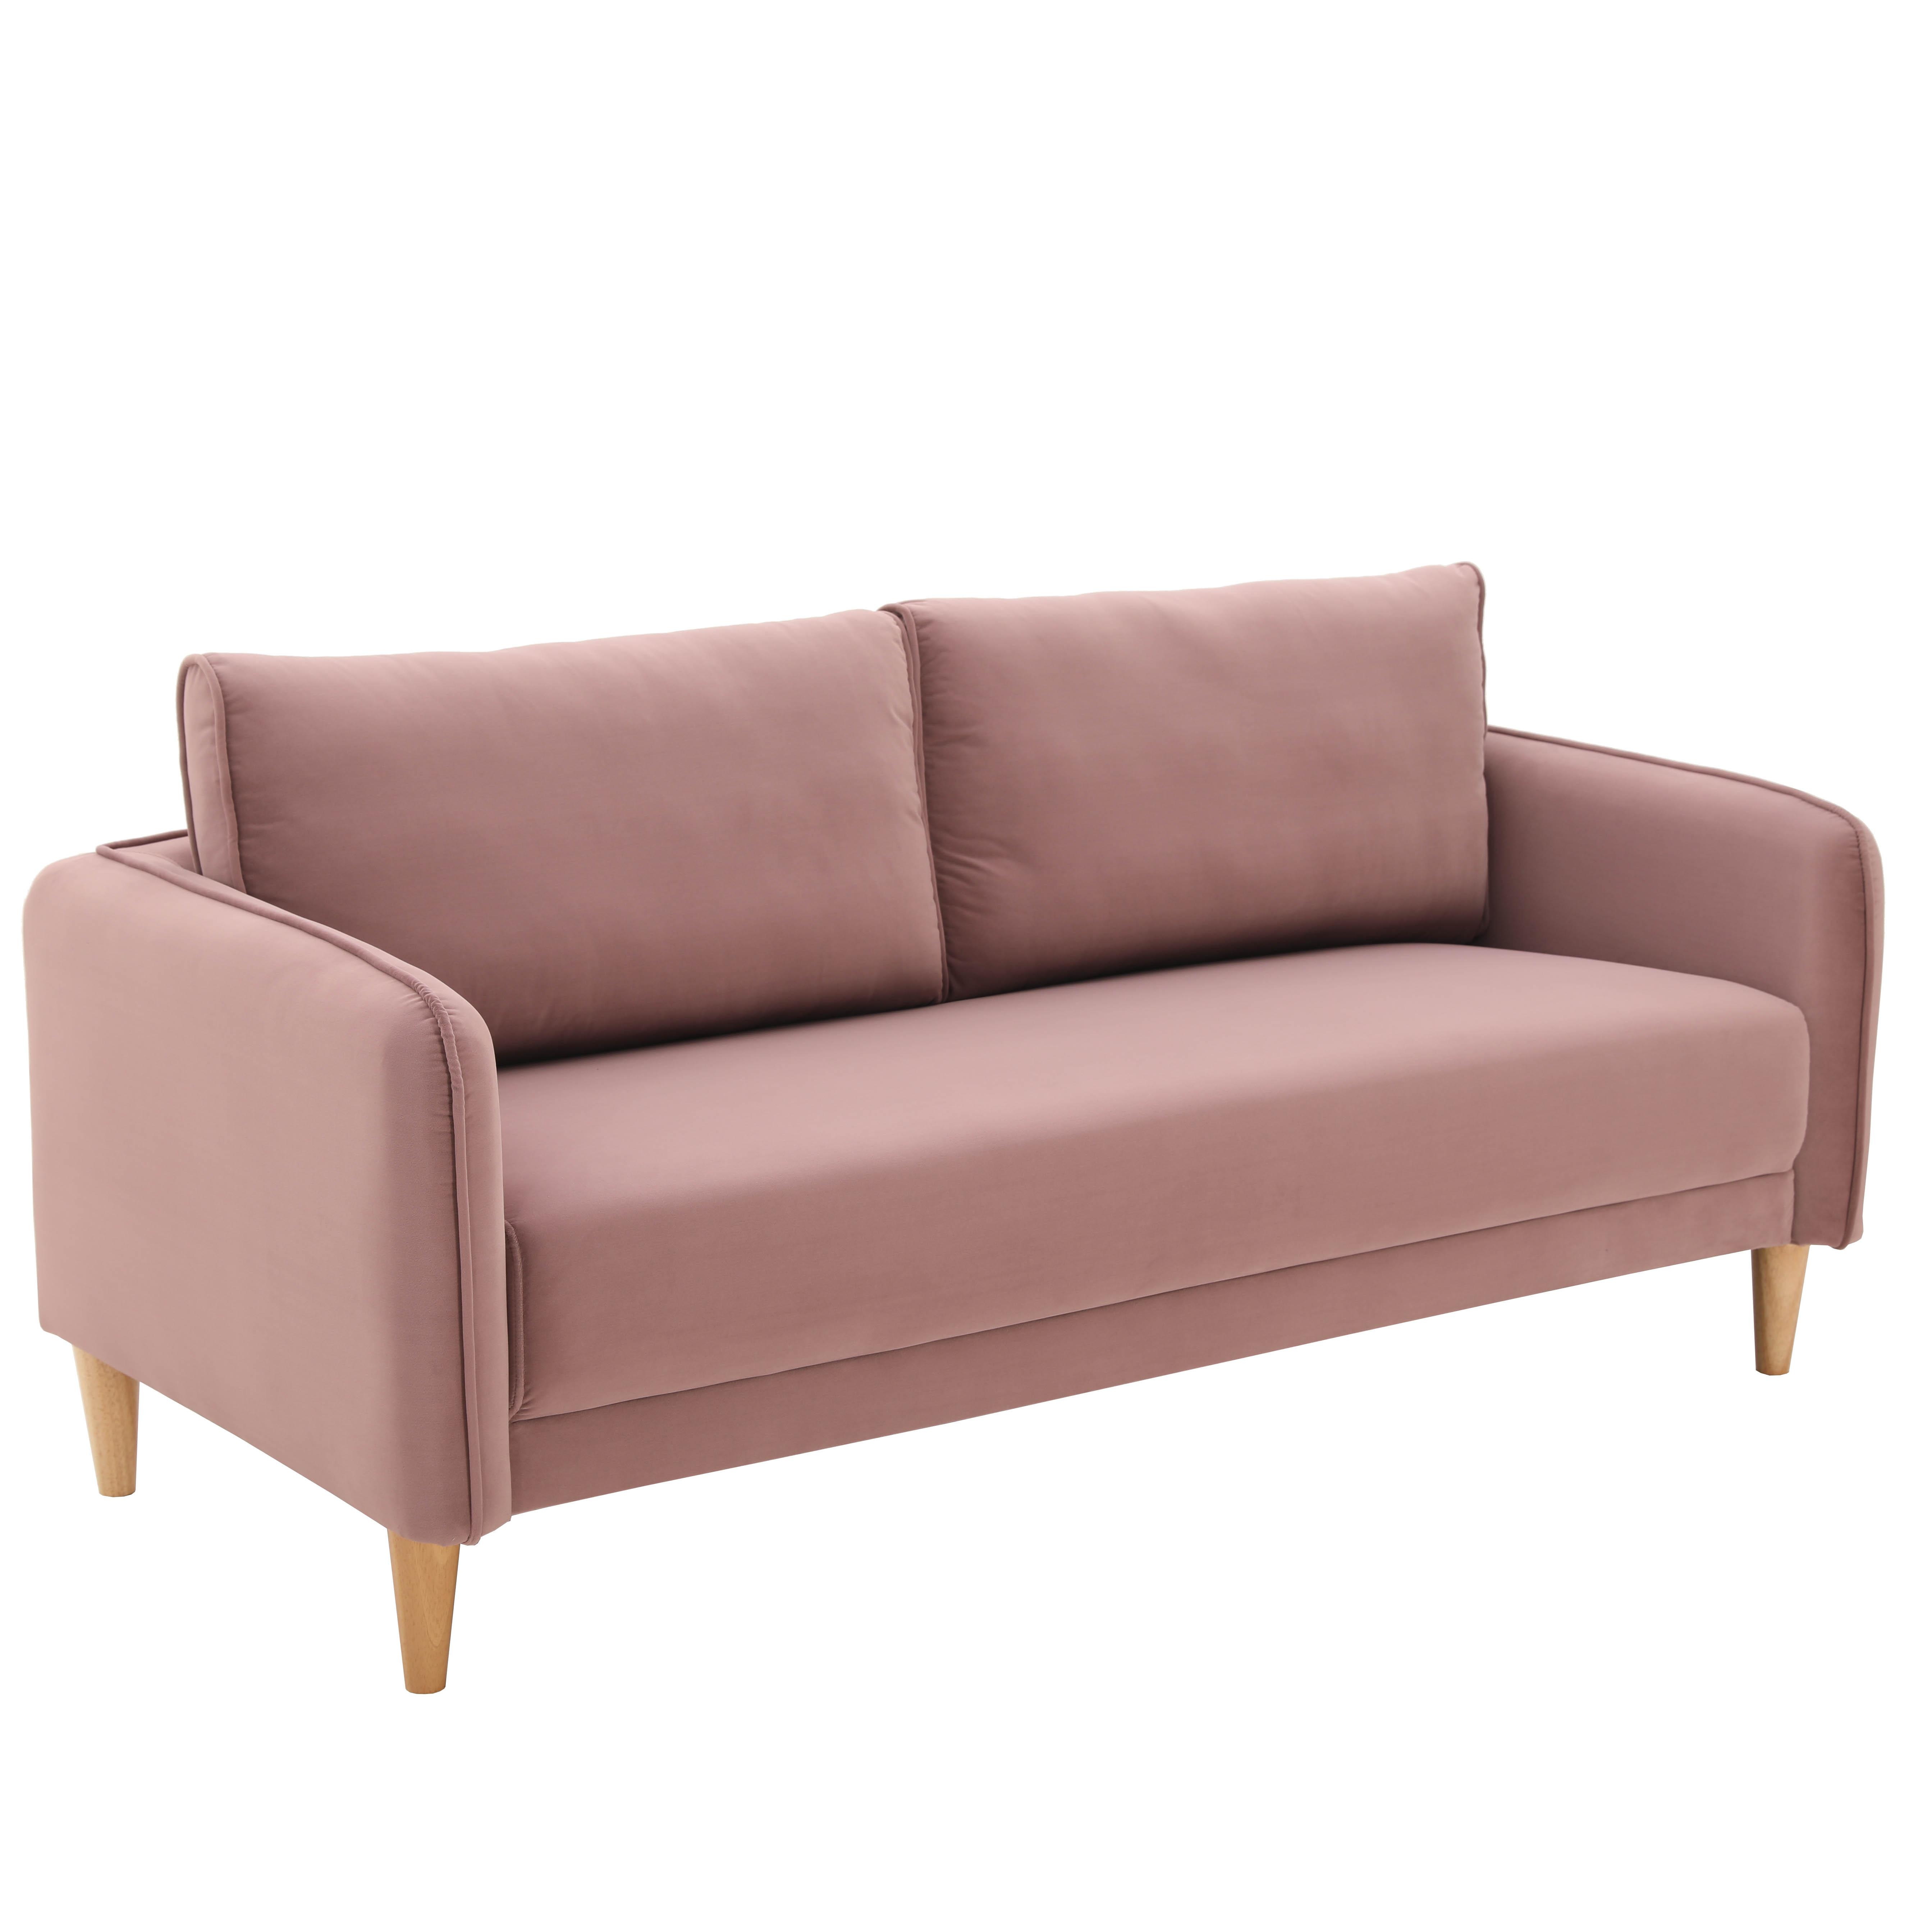 Sofa "Livia", dreisitzer, rosa, Samt - Rosa/Naturfarben, MODERN, Holz/Textil (176/78/76cm) - Bessagi Home